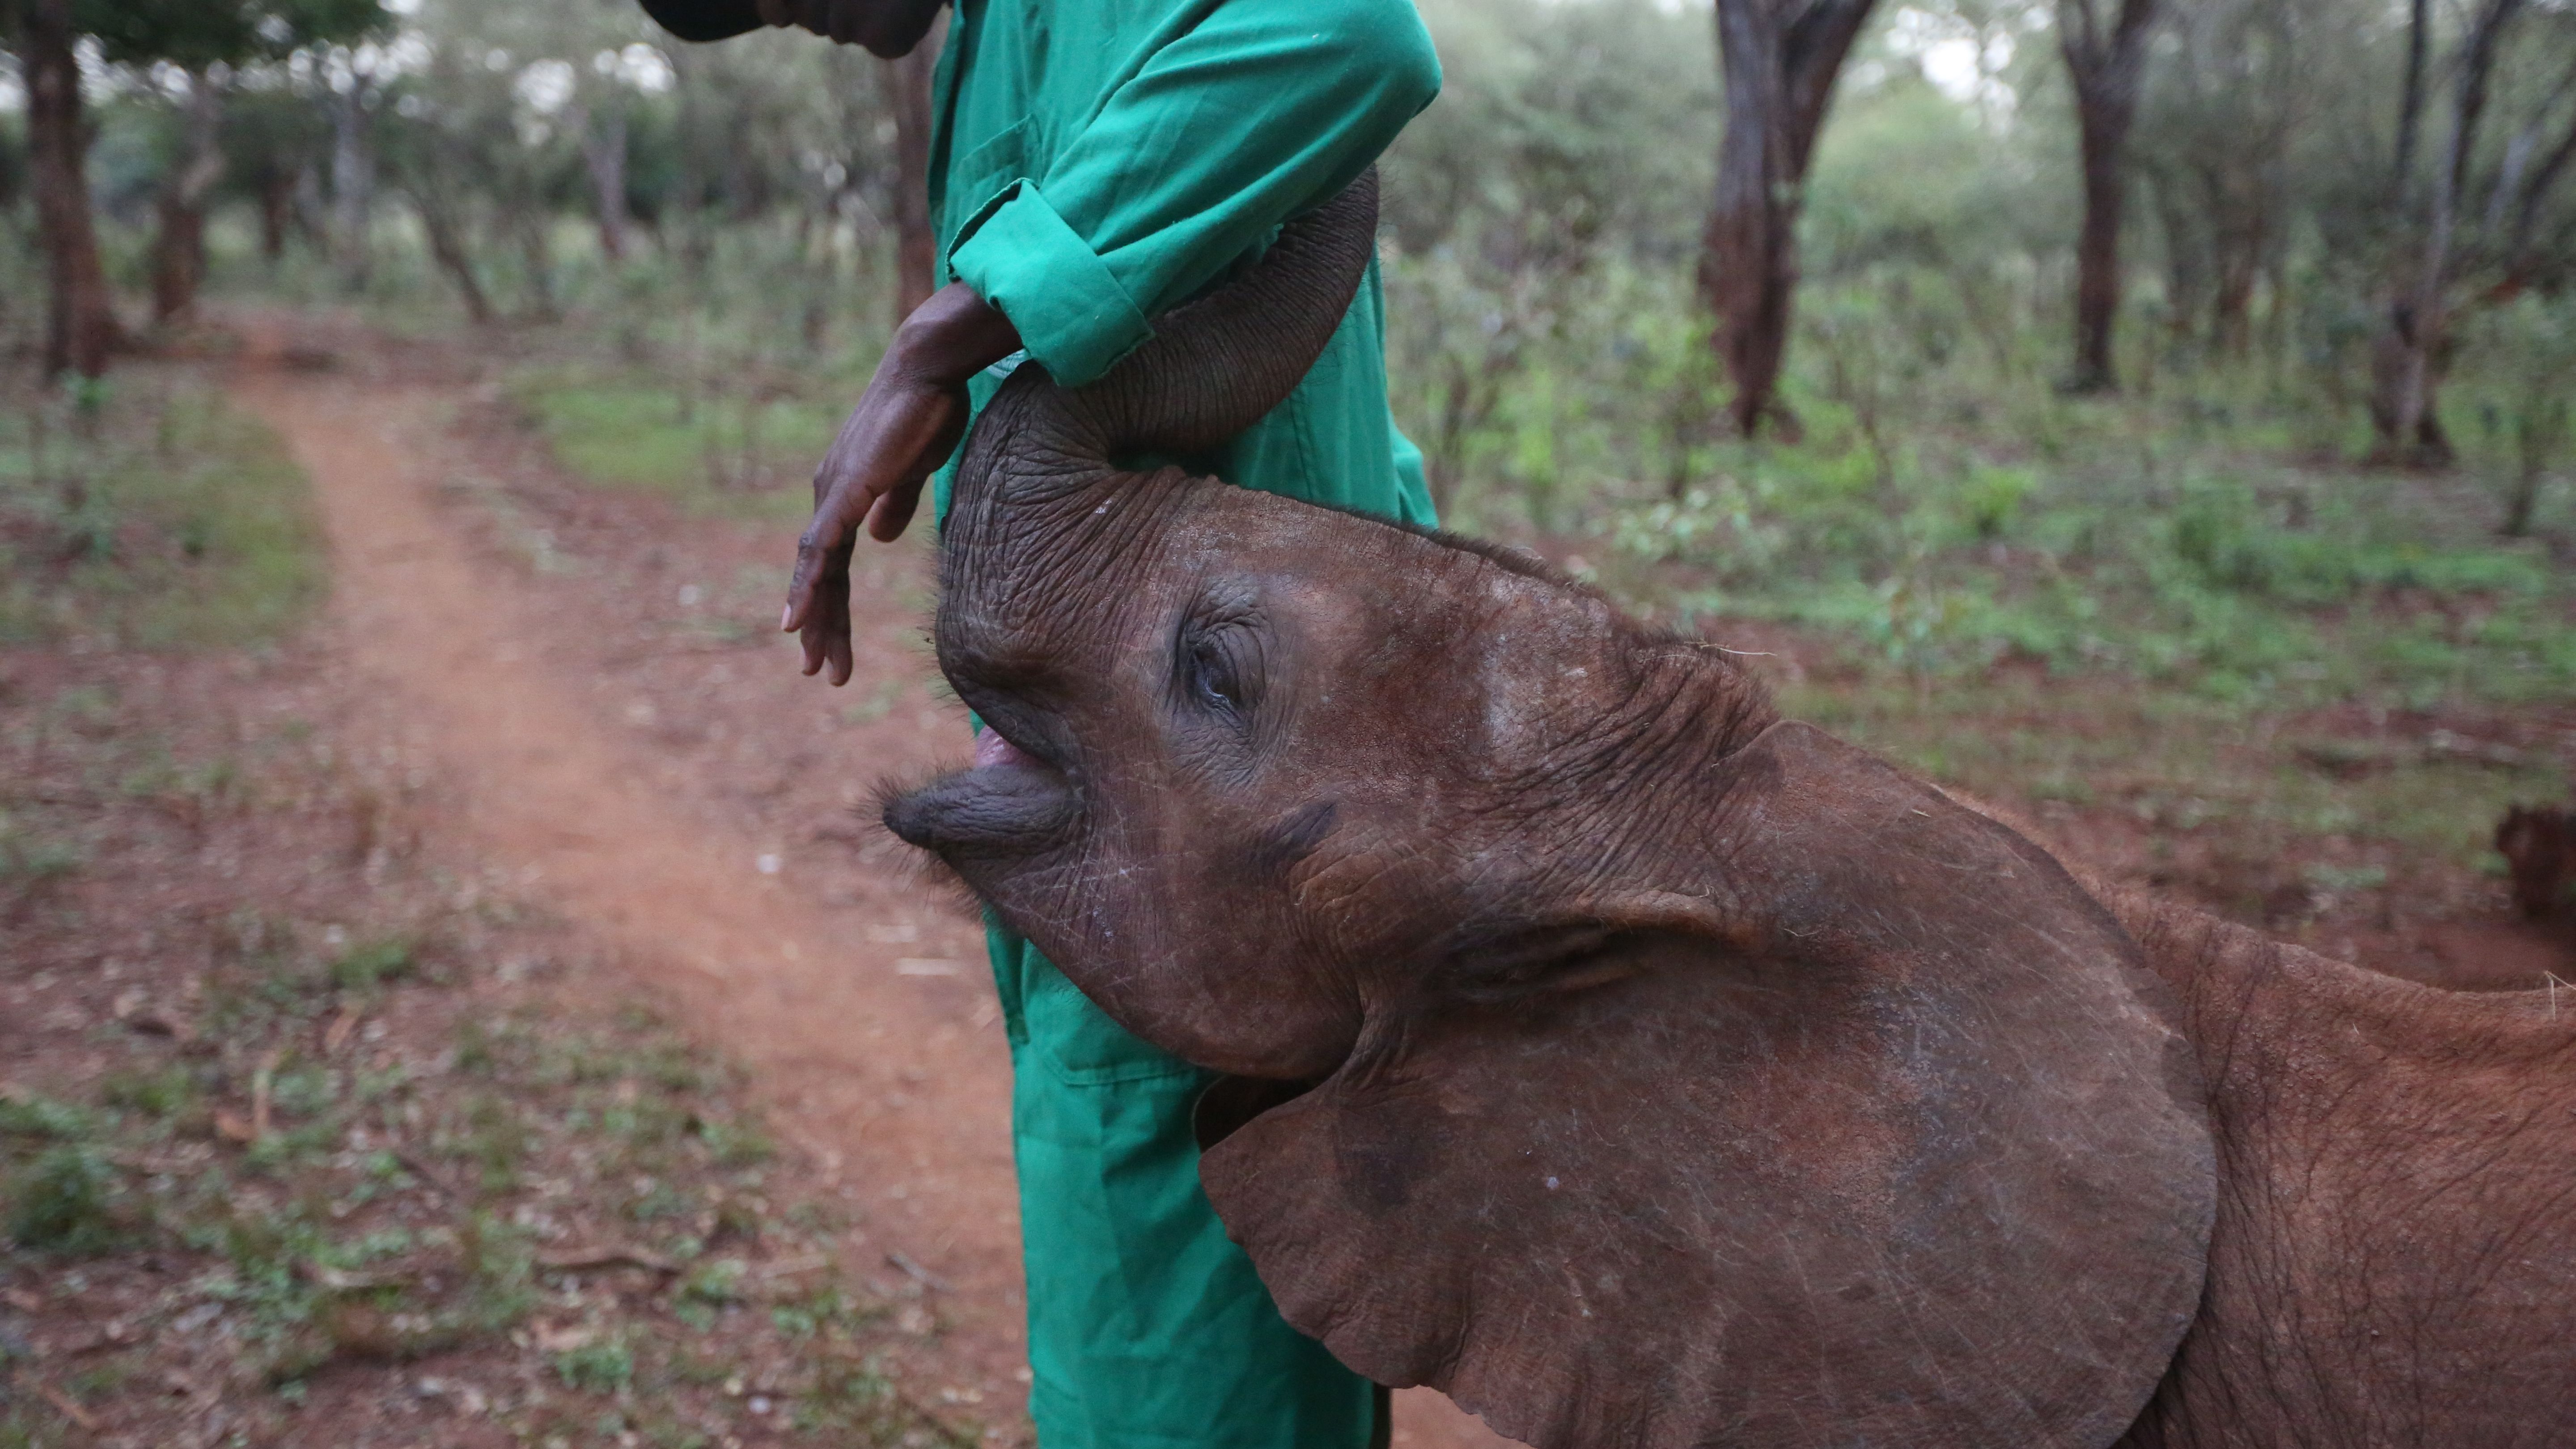 Peter Mbulu of the David Sheldrick Wildlife Trust caring for a baby elephant. Image by Janelle Richards. Kenya, 2017.